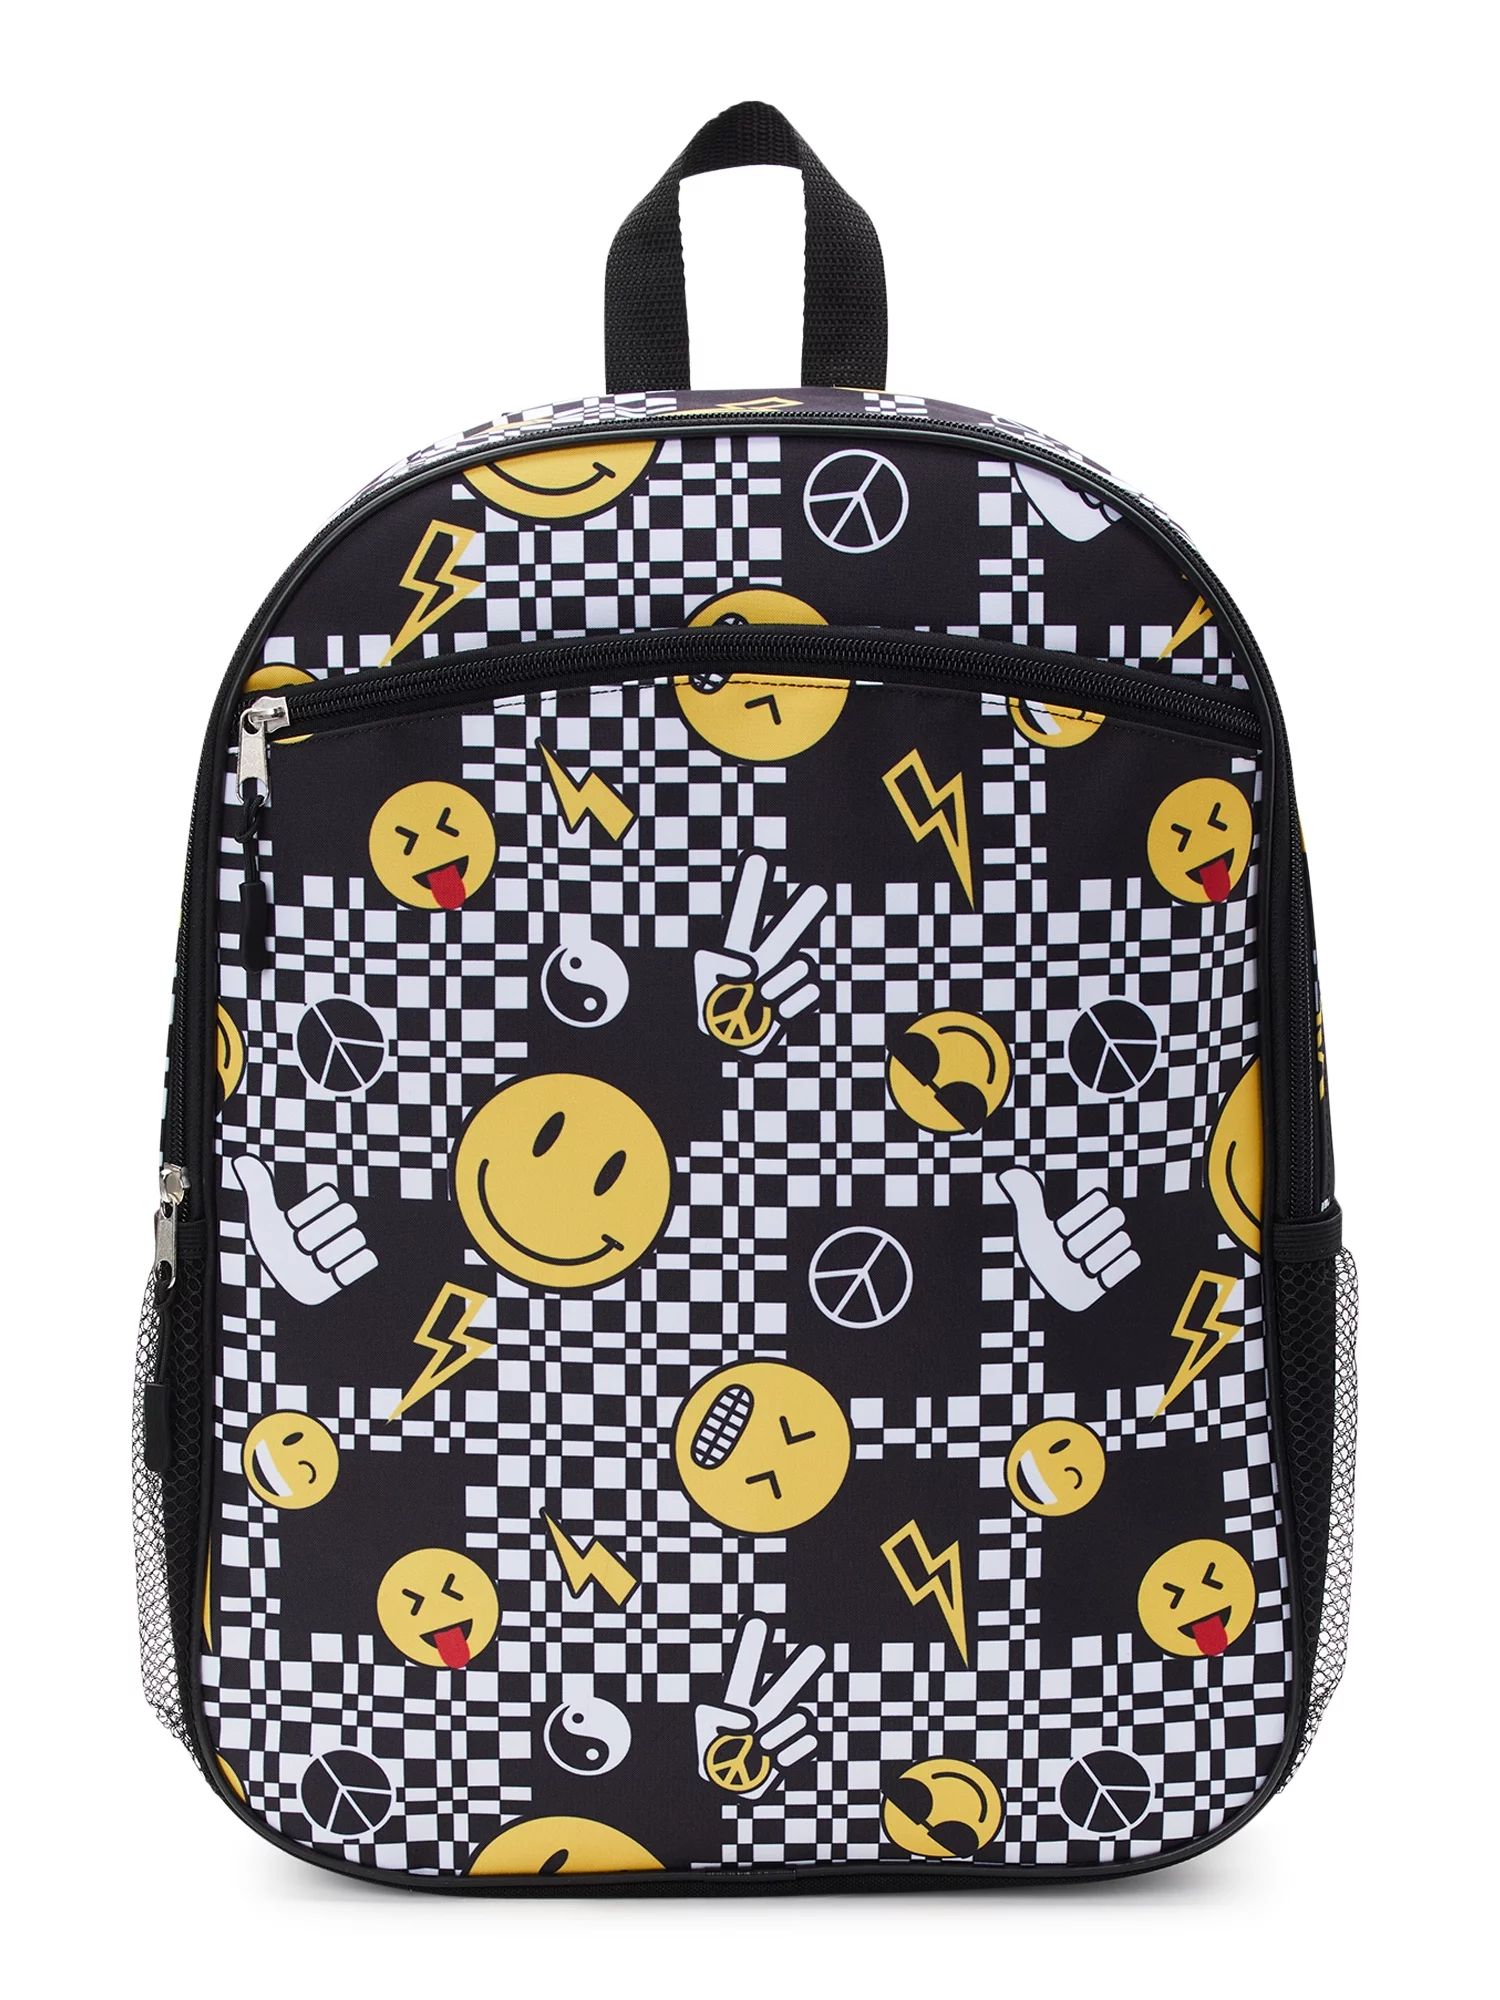 Wonder Nation Kids 16" Laptop Backpack, Smiles Black White | Walmart (US)